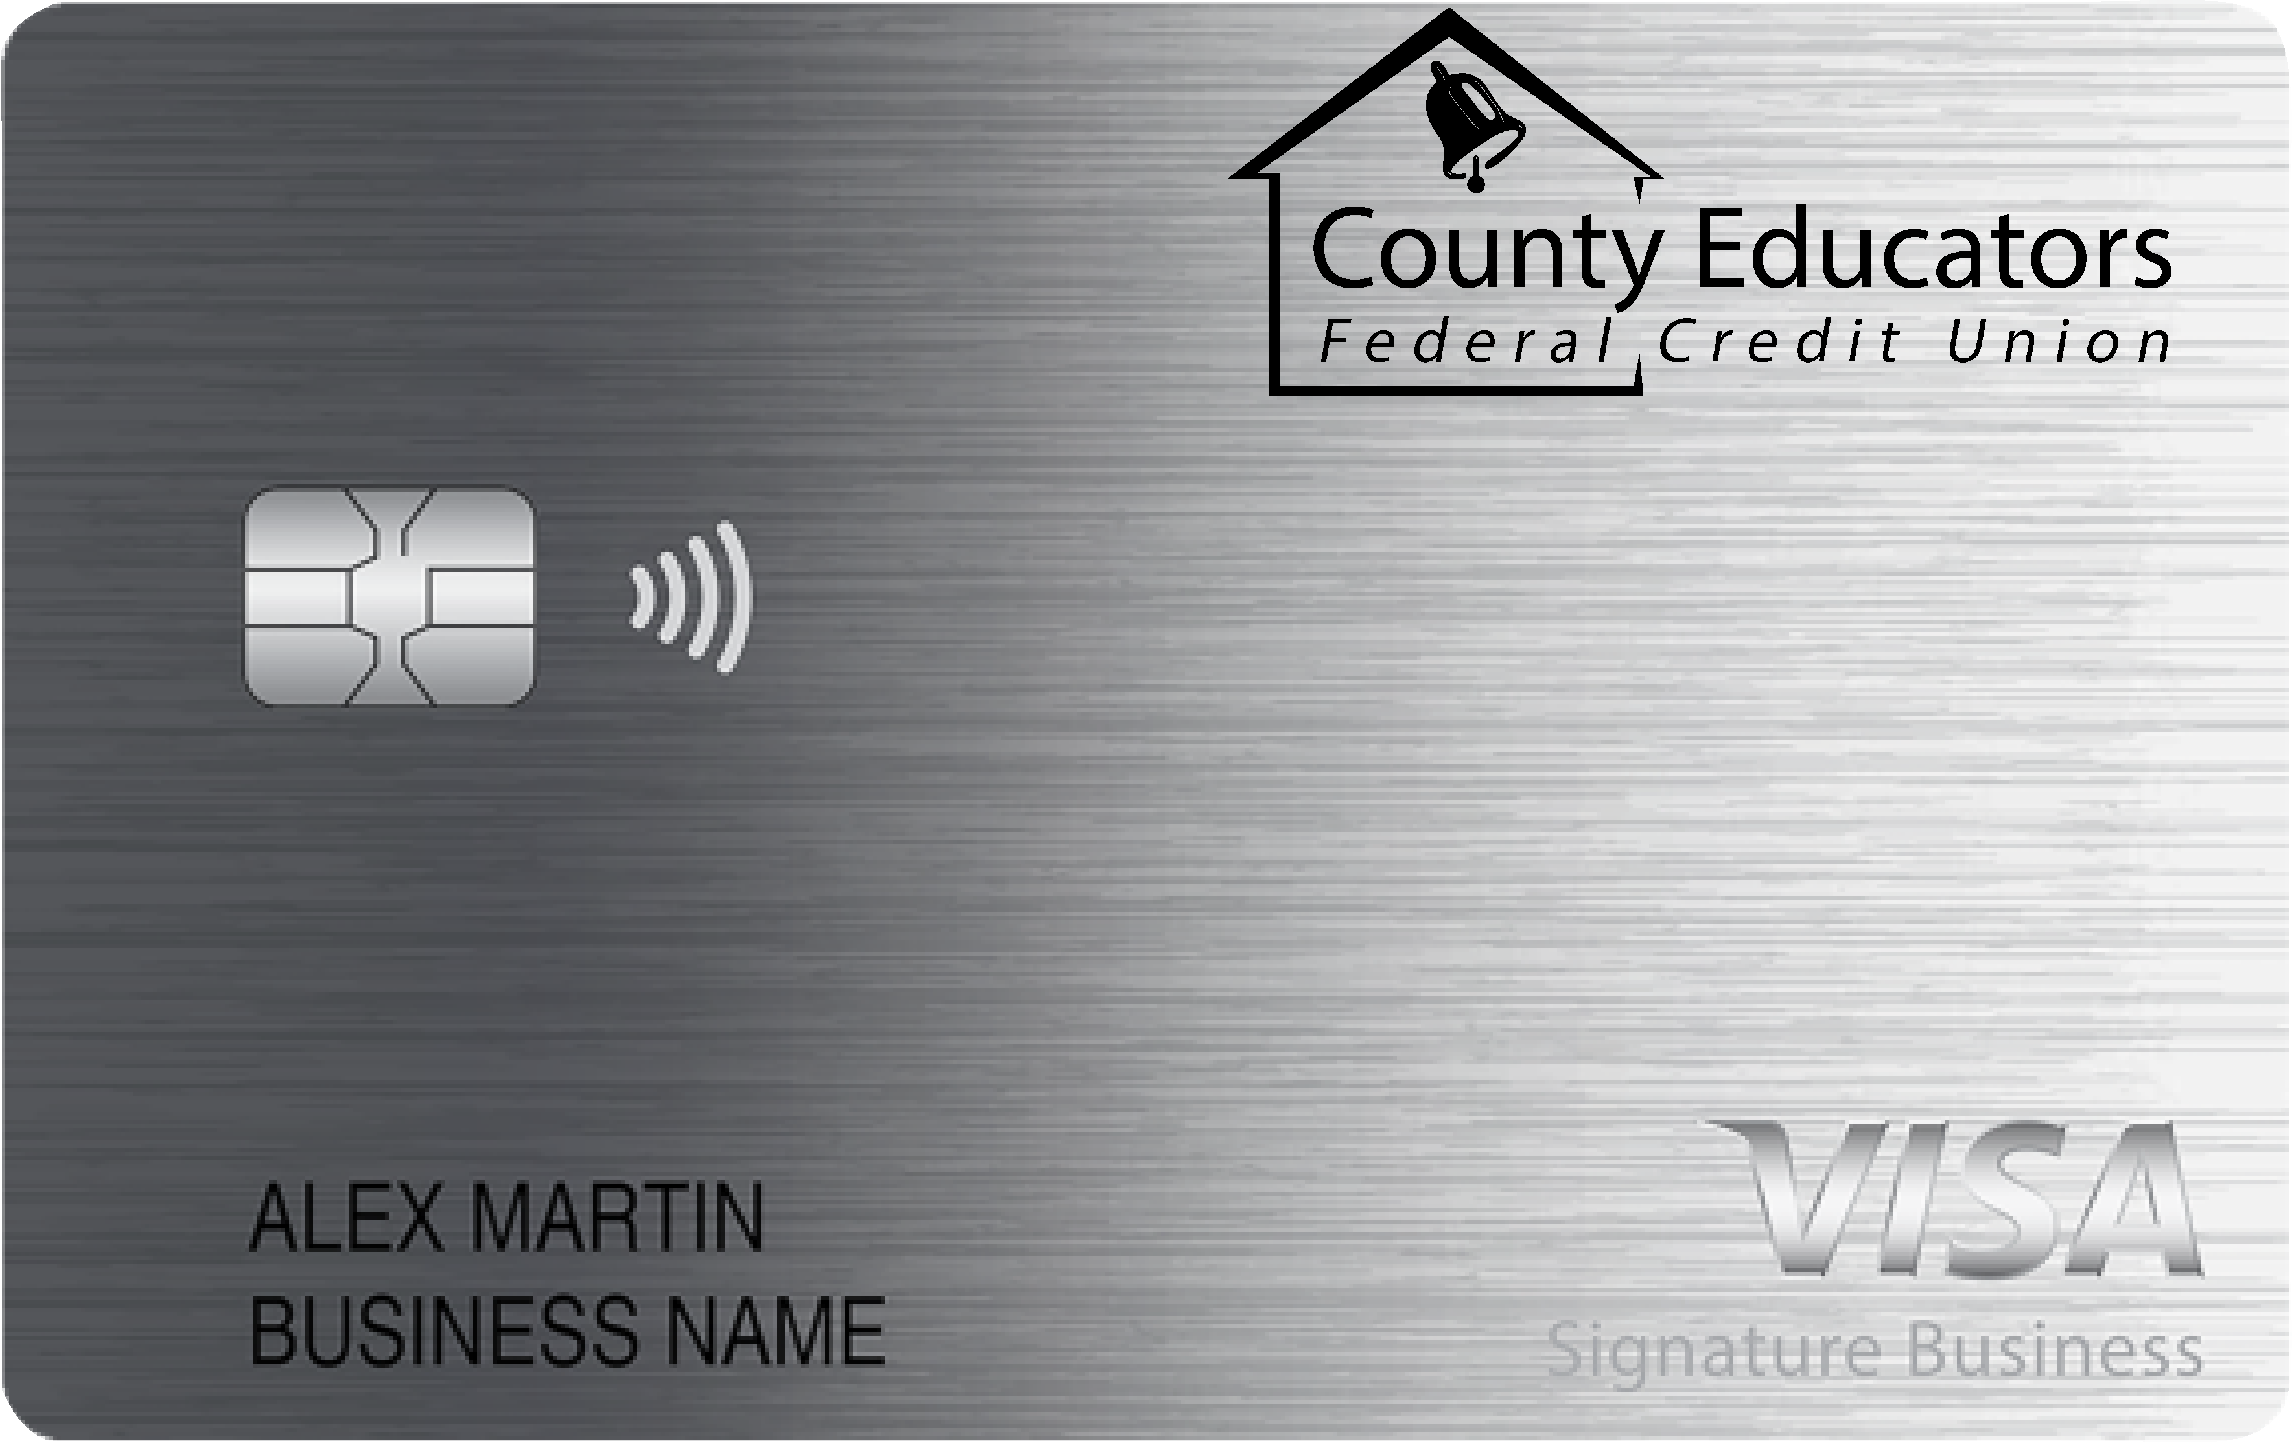 County Educators Federal Credit Union Smart Business Rewards Card